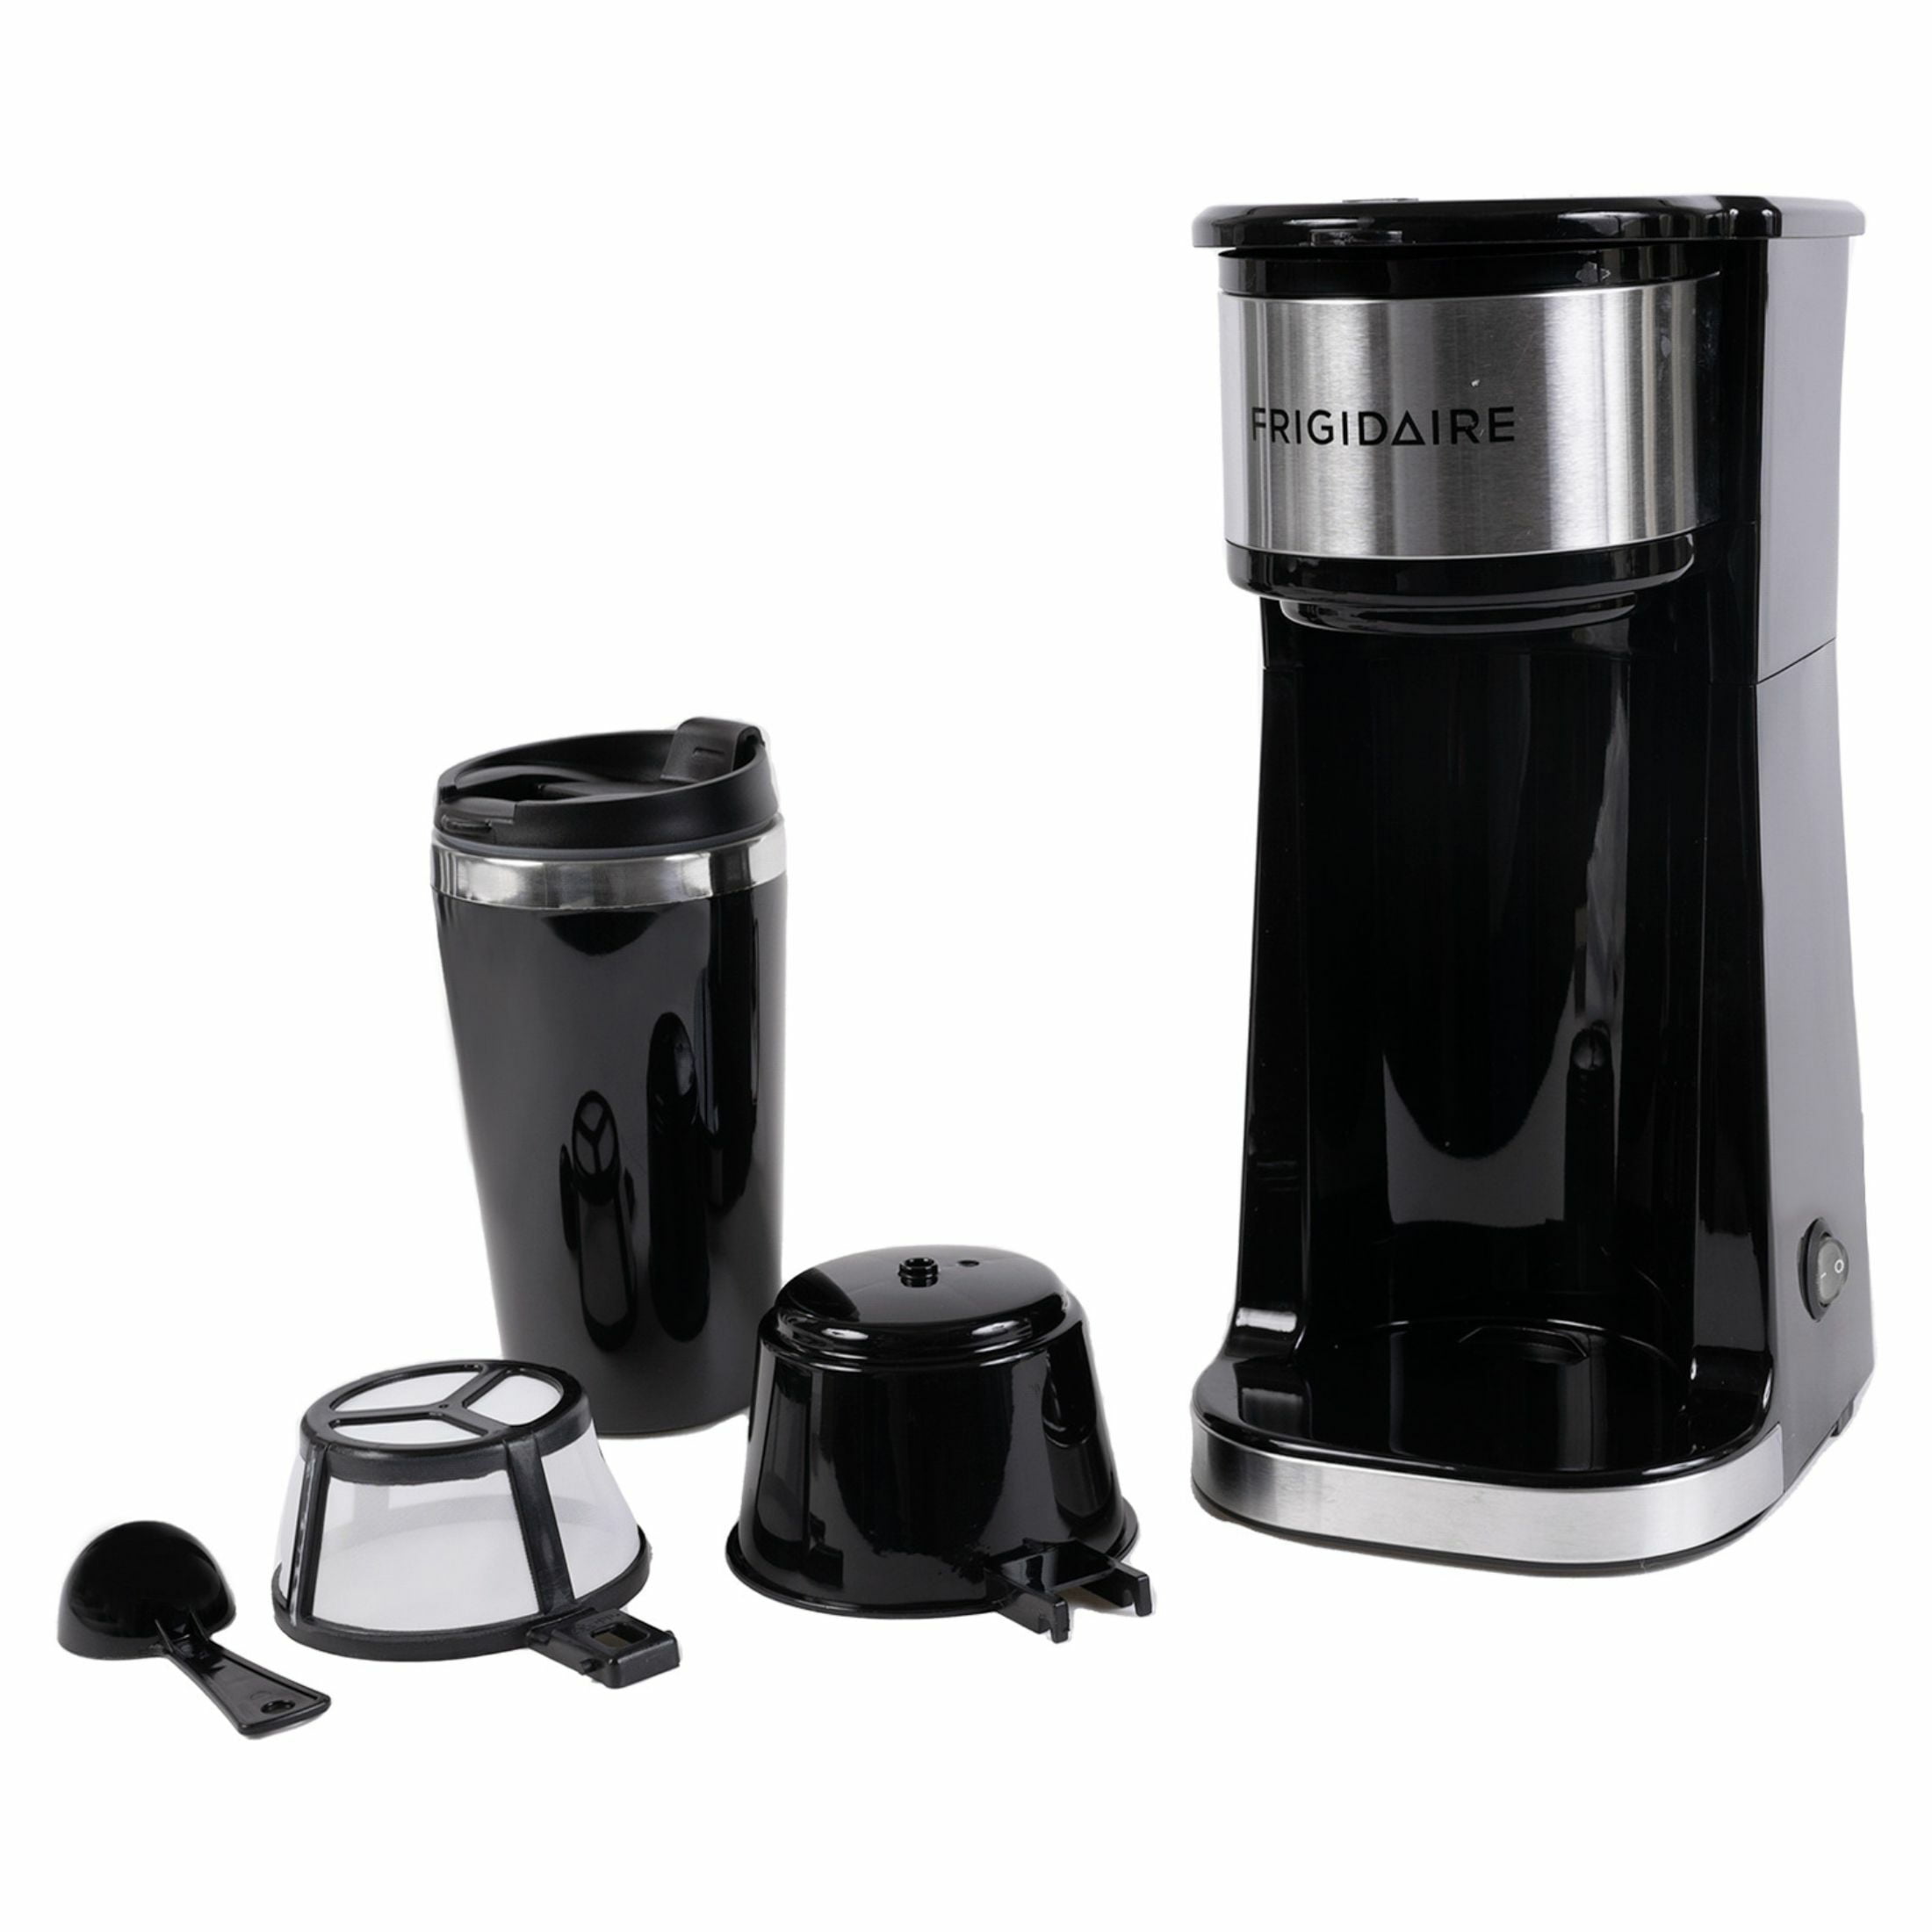  FRIECMK110BLACK  Frigidaire 2-in-1 Single Serve K-Cup/Ground  Coffee Maker - Black